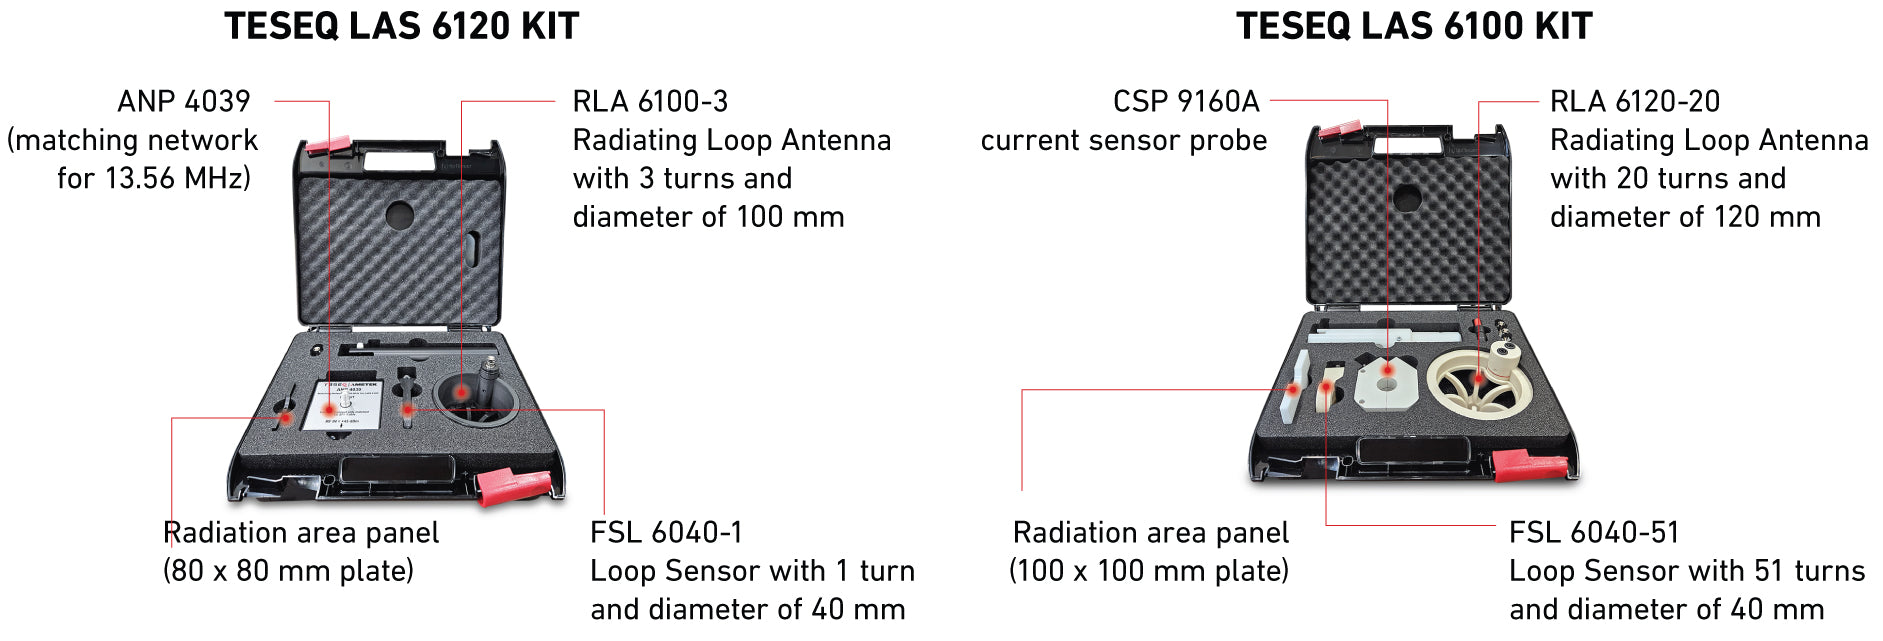 Teseq LAS 6120 and LAS 6100 Antenna kits with Labels